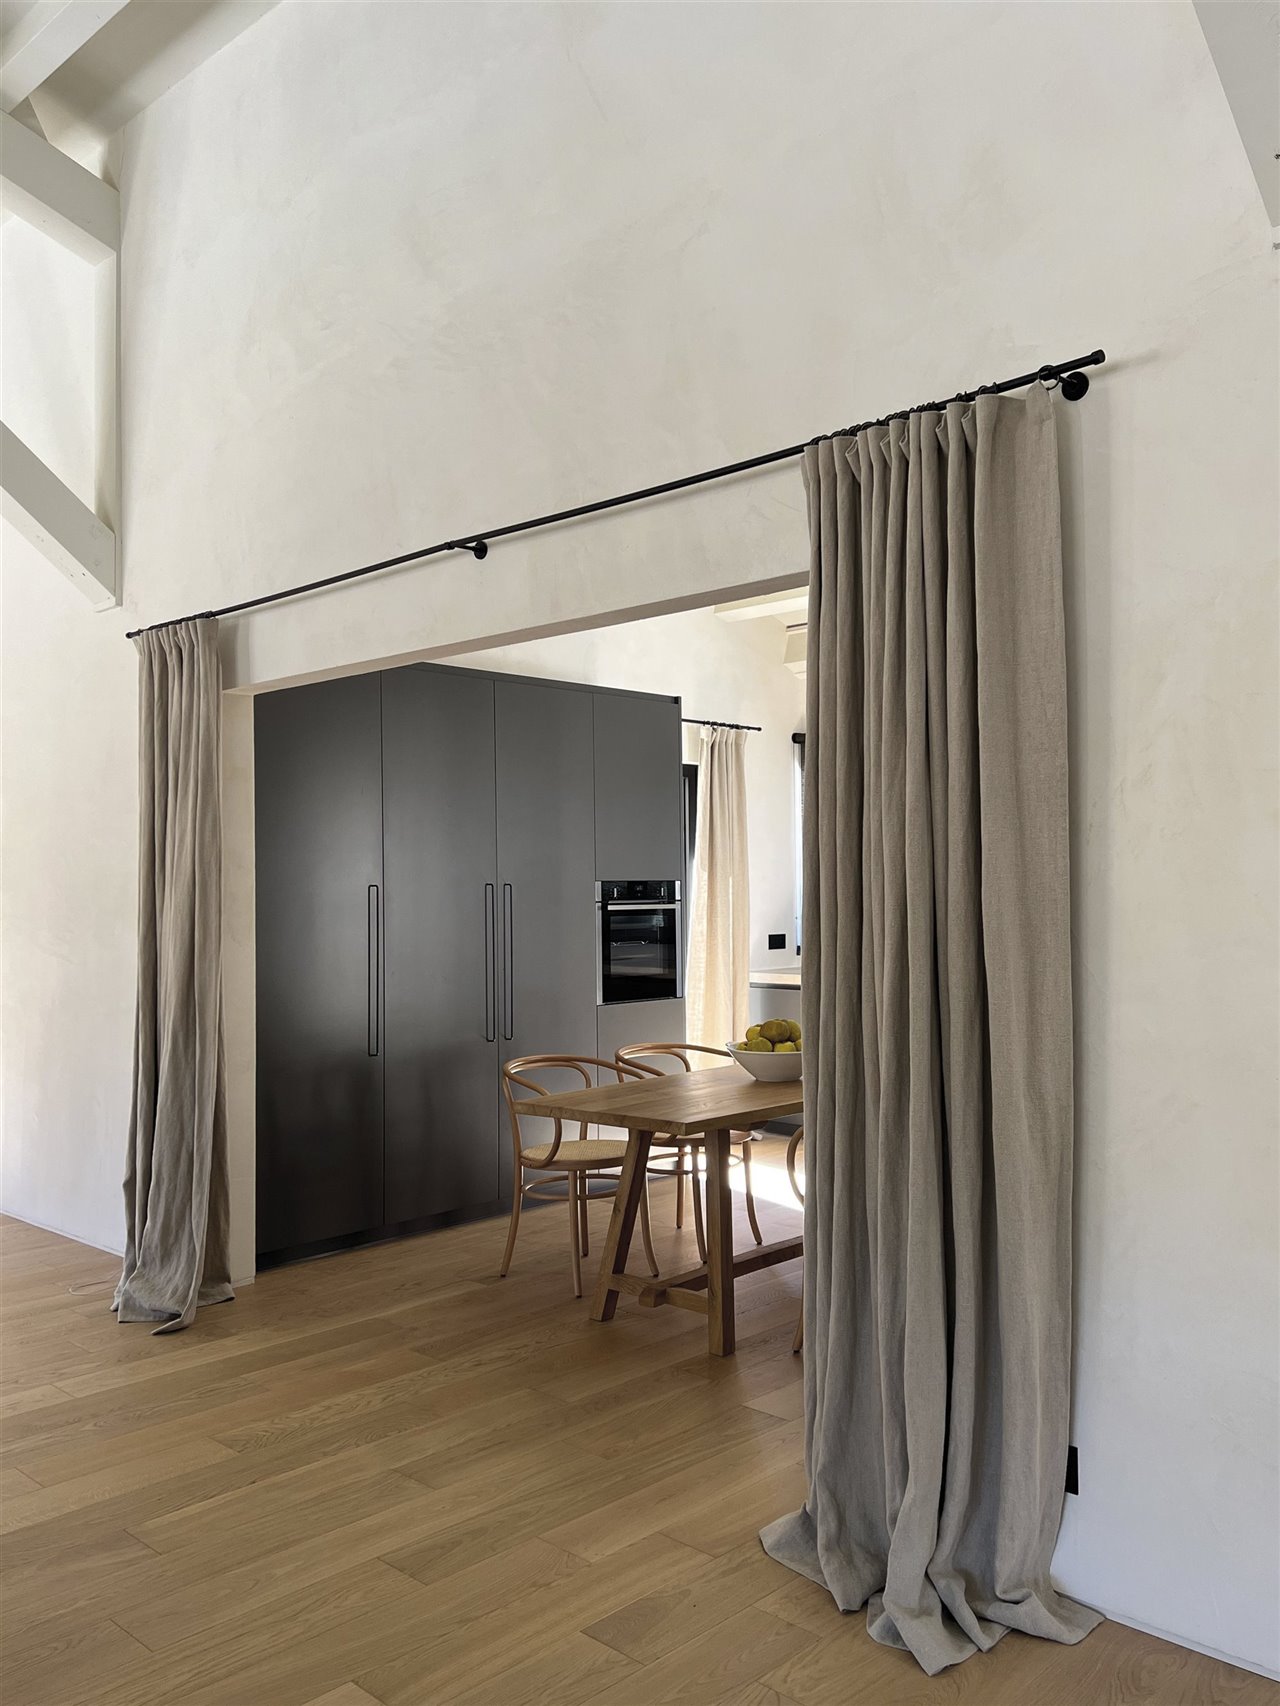 4 cortinas para cocinas modernas que se instalan sin hacer agujeros